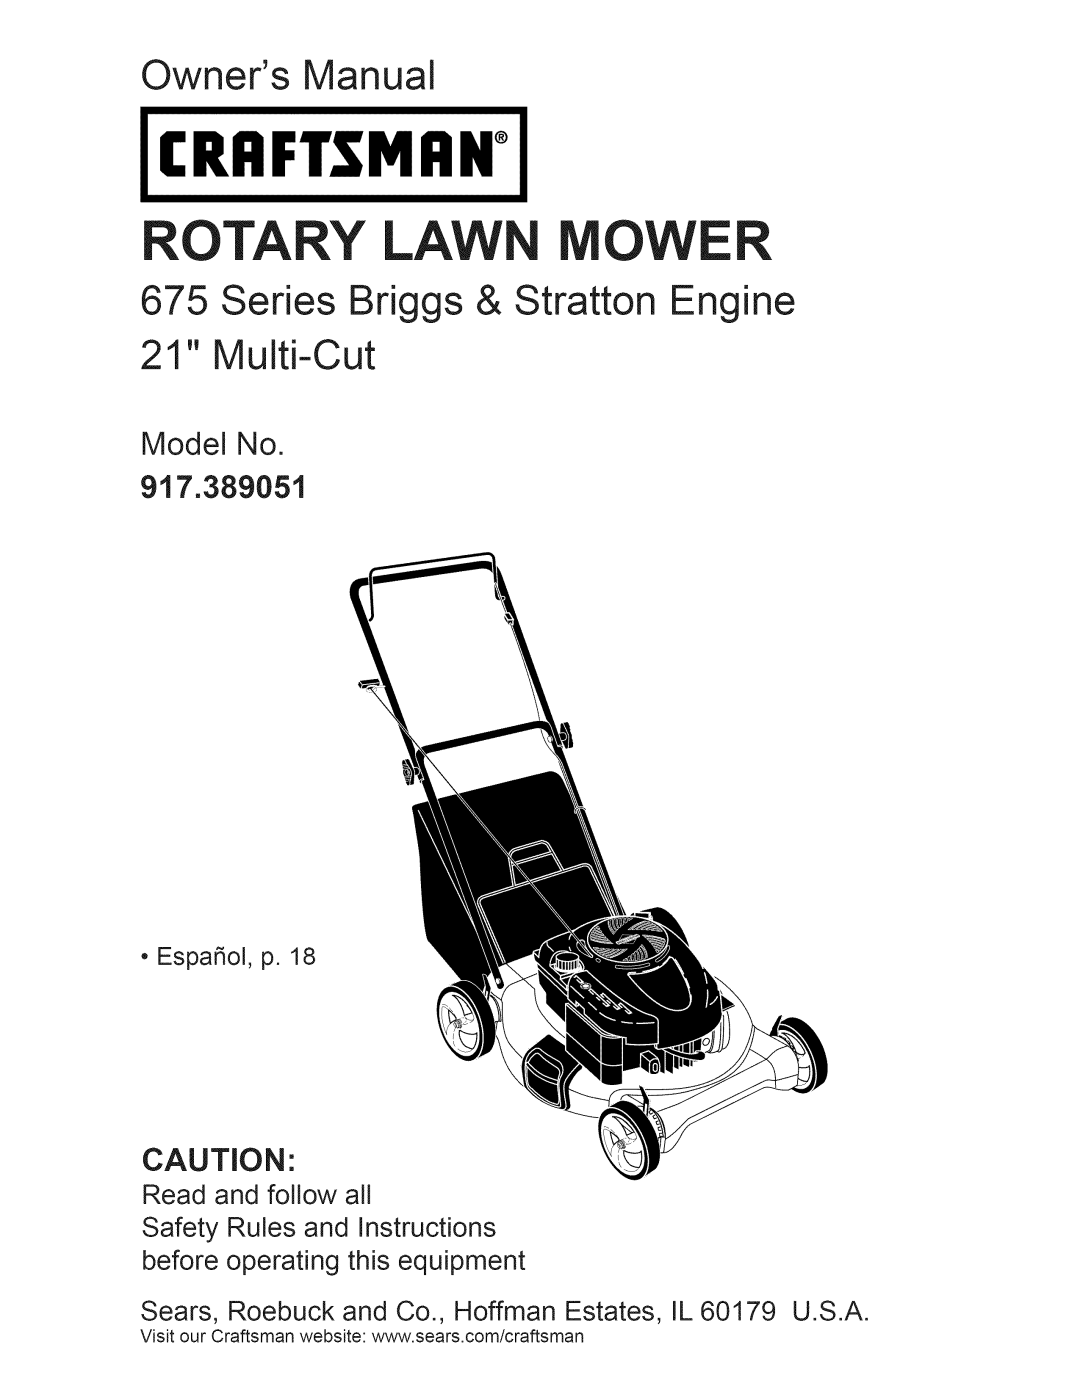 Craftsman manual Model No 917.389051, Craftsman, Rotary Lawn Mower, Owners Manual 